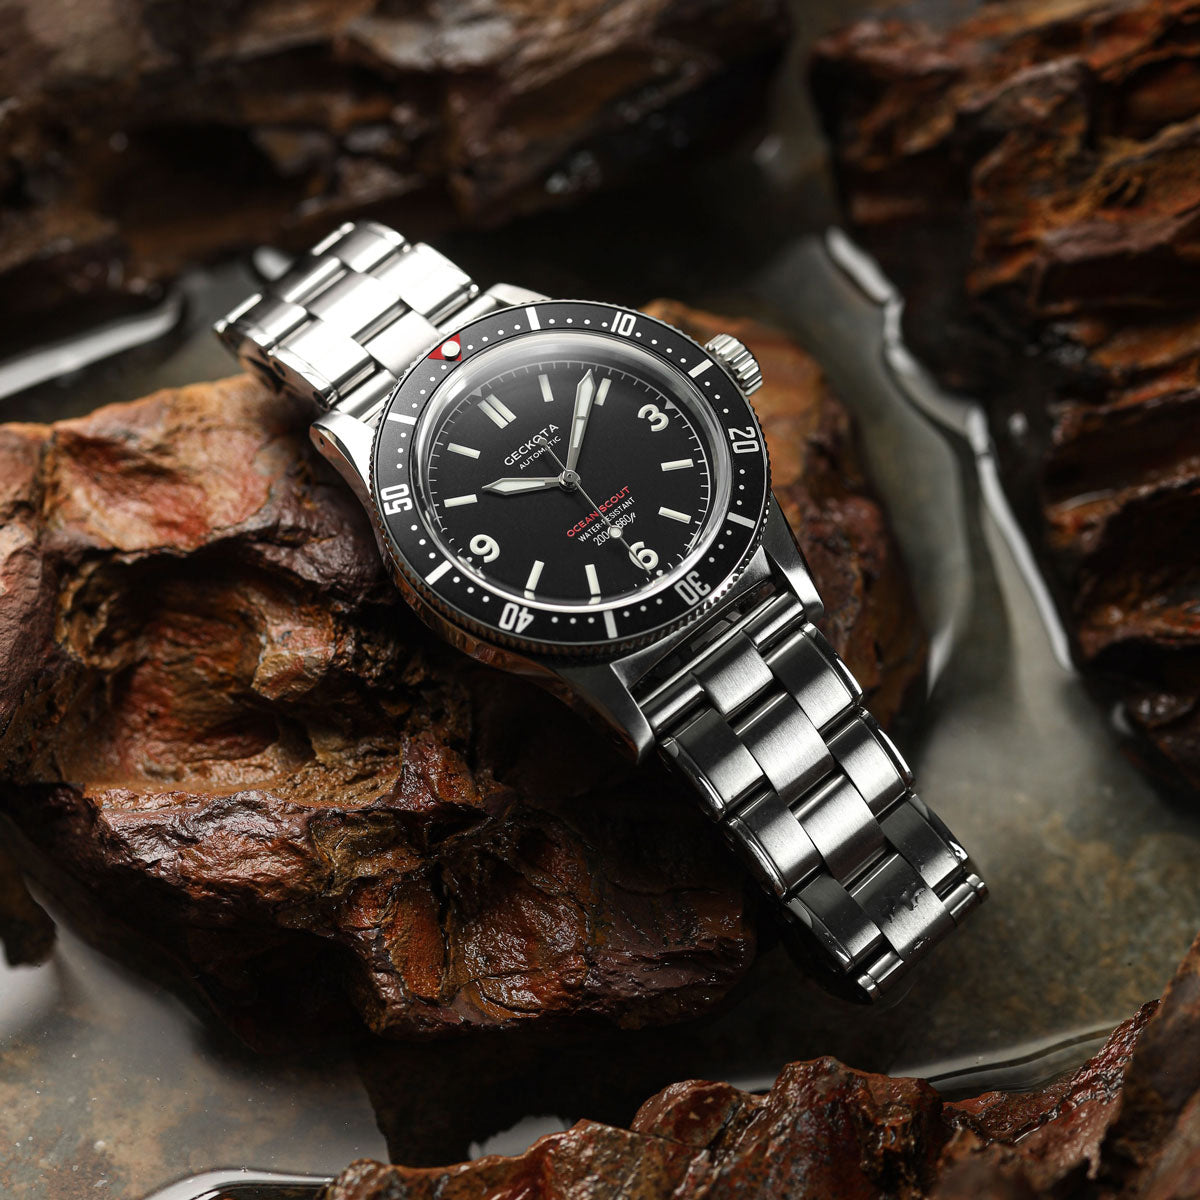 Ocean-Scout Vintage Rivet Berwick Stainless Steel Watch Bracelet - additional image 1